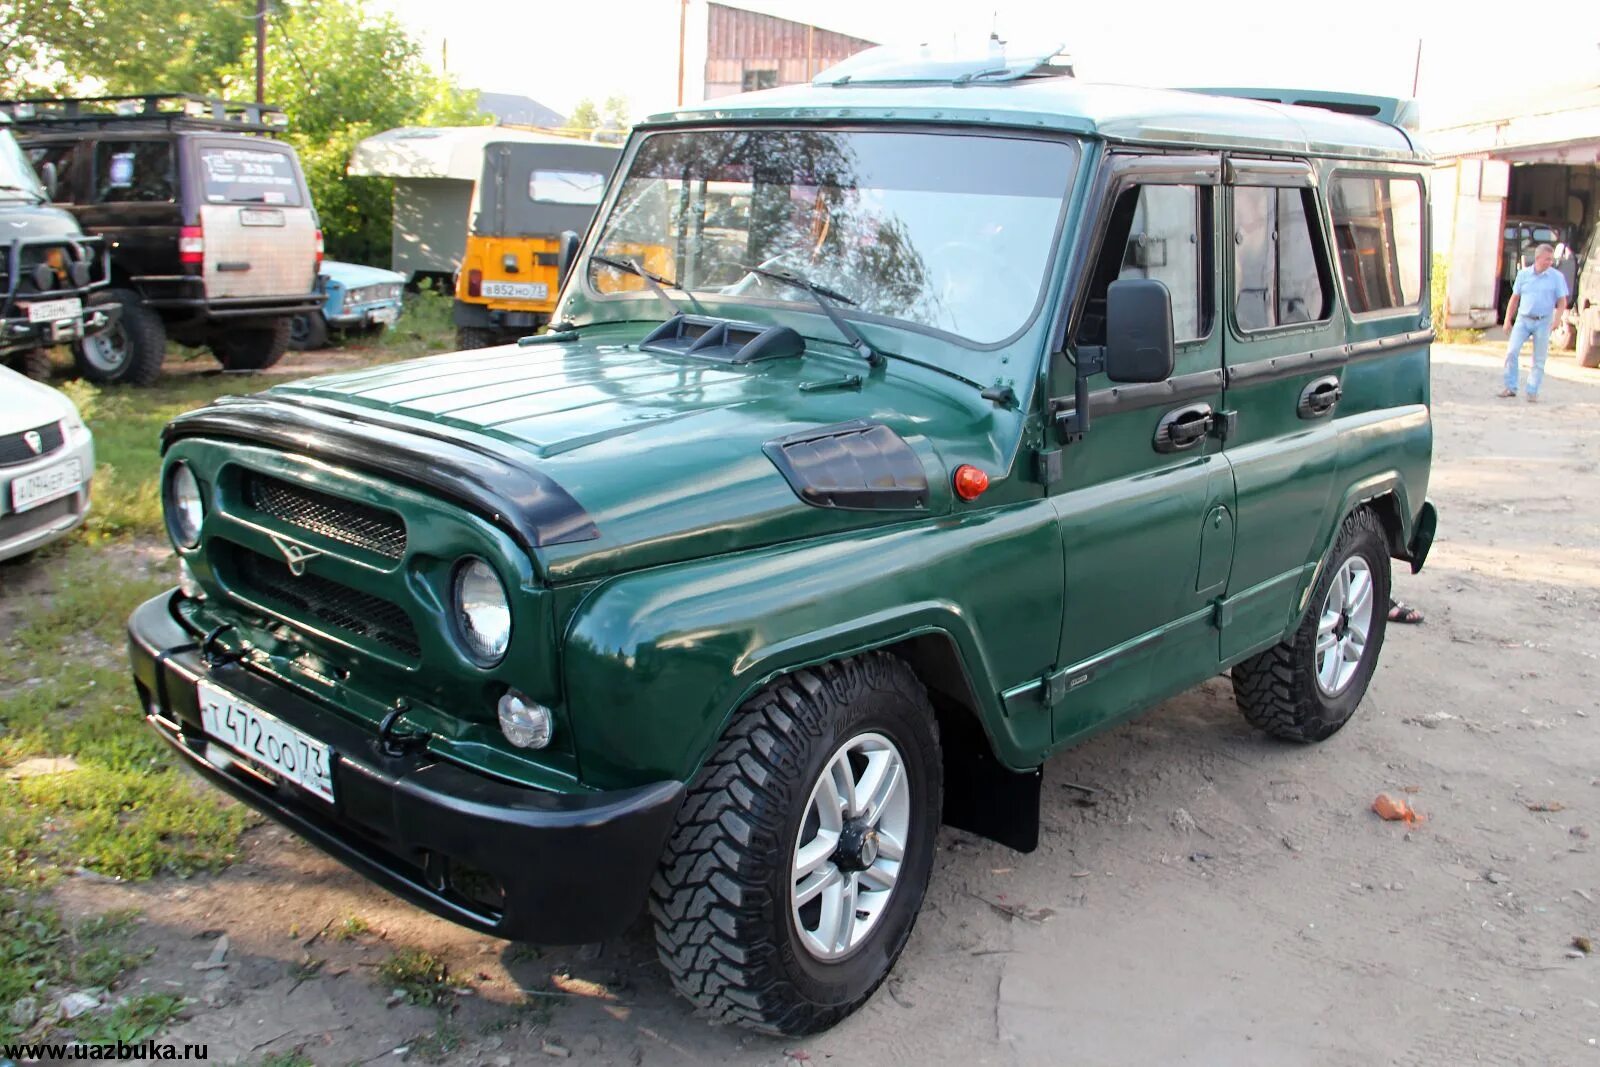 УАЗ 469 зеленый. УАЗ 31514 зеленый металлик. УАЗ-315195 «Хантер». УАЗ 469 зелёный металлик. Зеленые хантеры